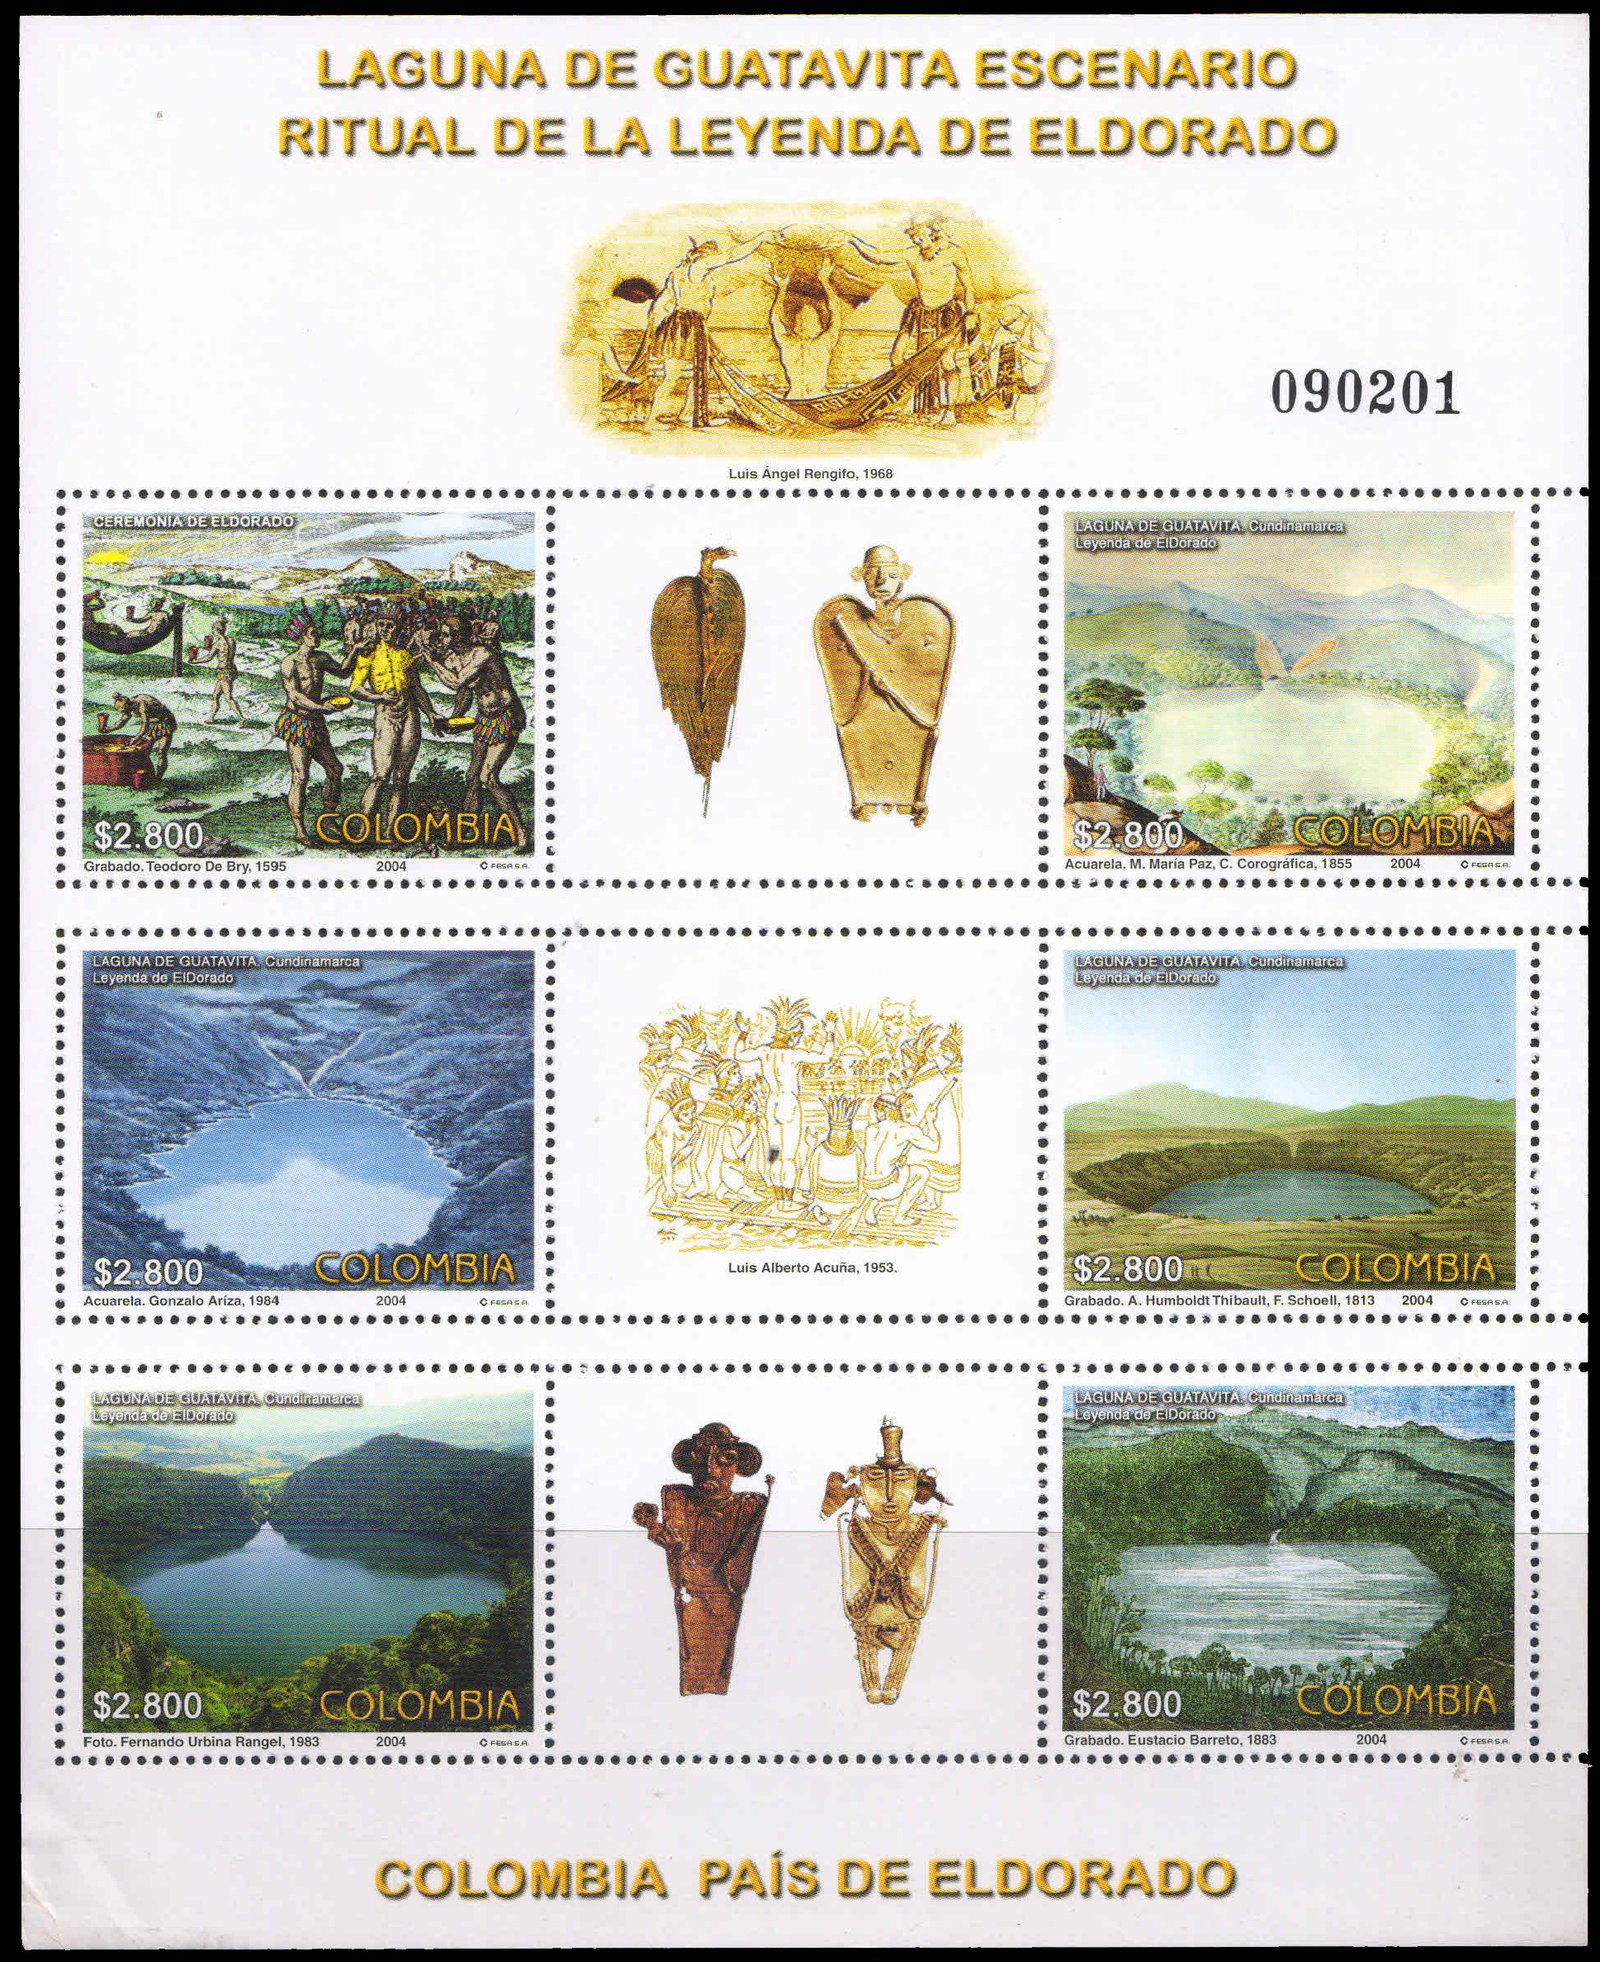 COLOMBIA 2004-Laguna de Guatevita-Site of Legend of EL Dorado, Cult of the Muisca Indians, Sheet of 6 stamps & Labels, S.G. 2338-2343-Cat £ 32-